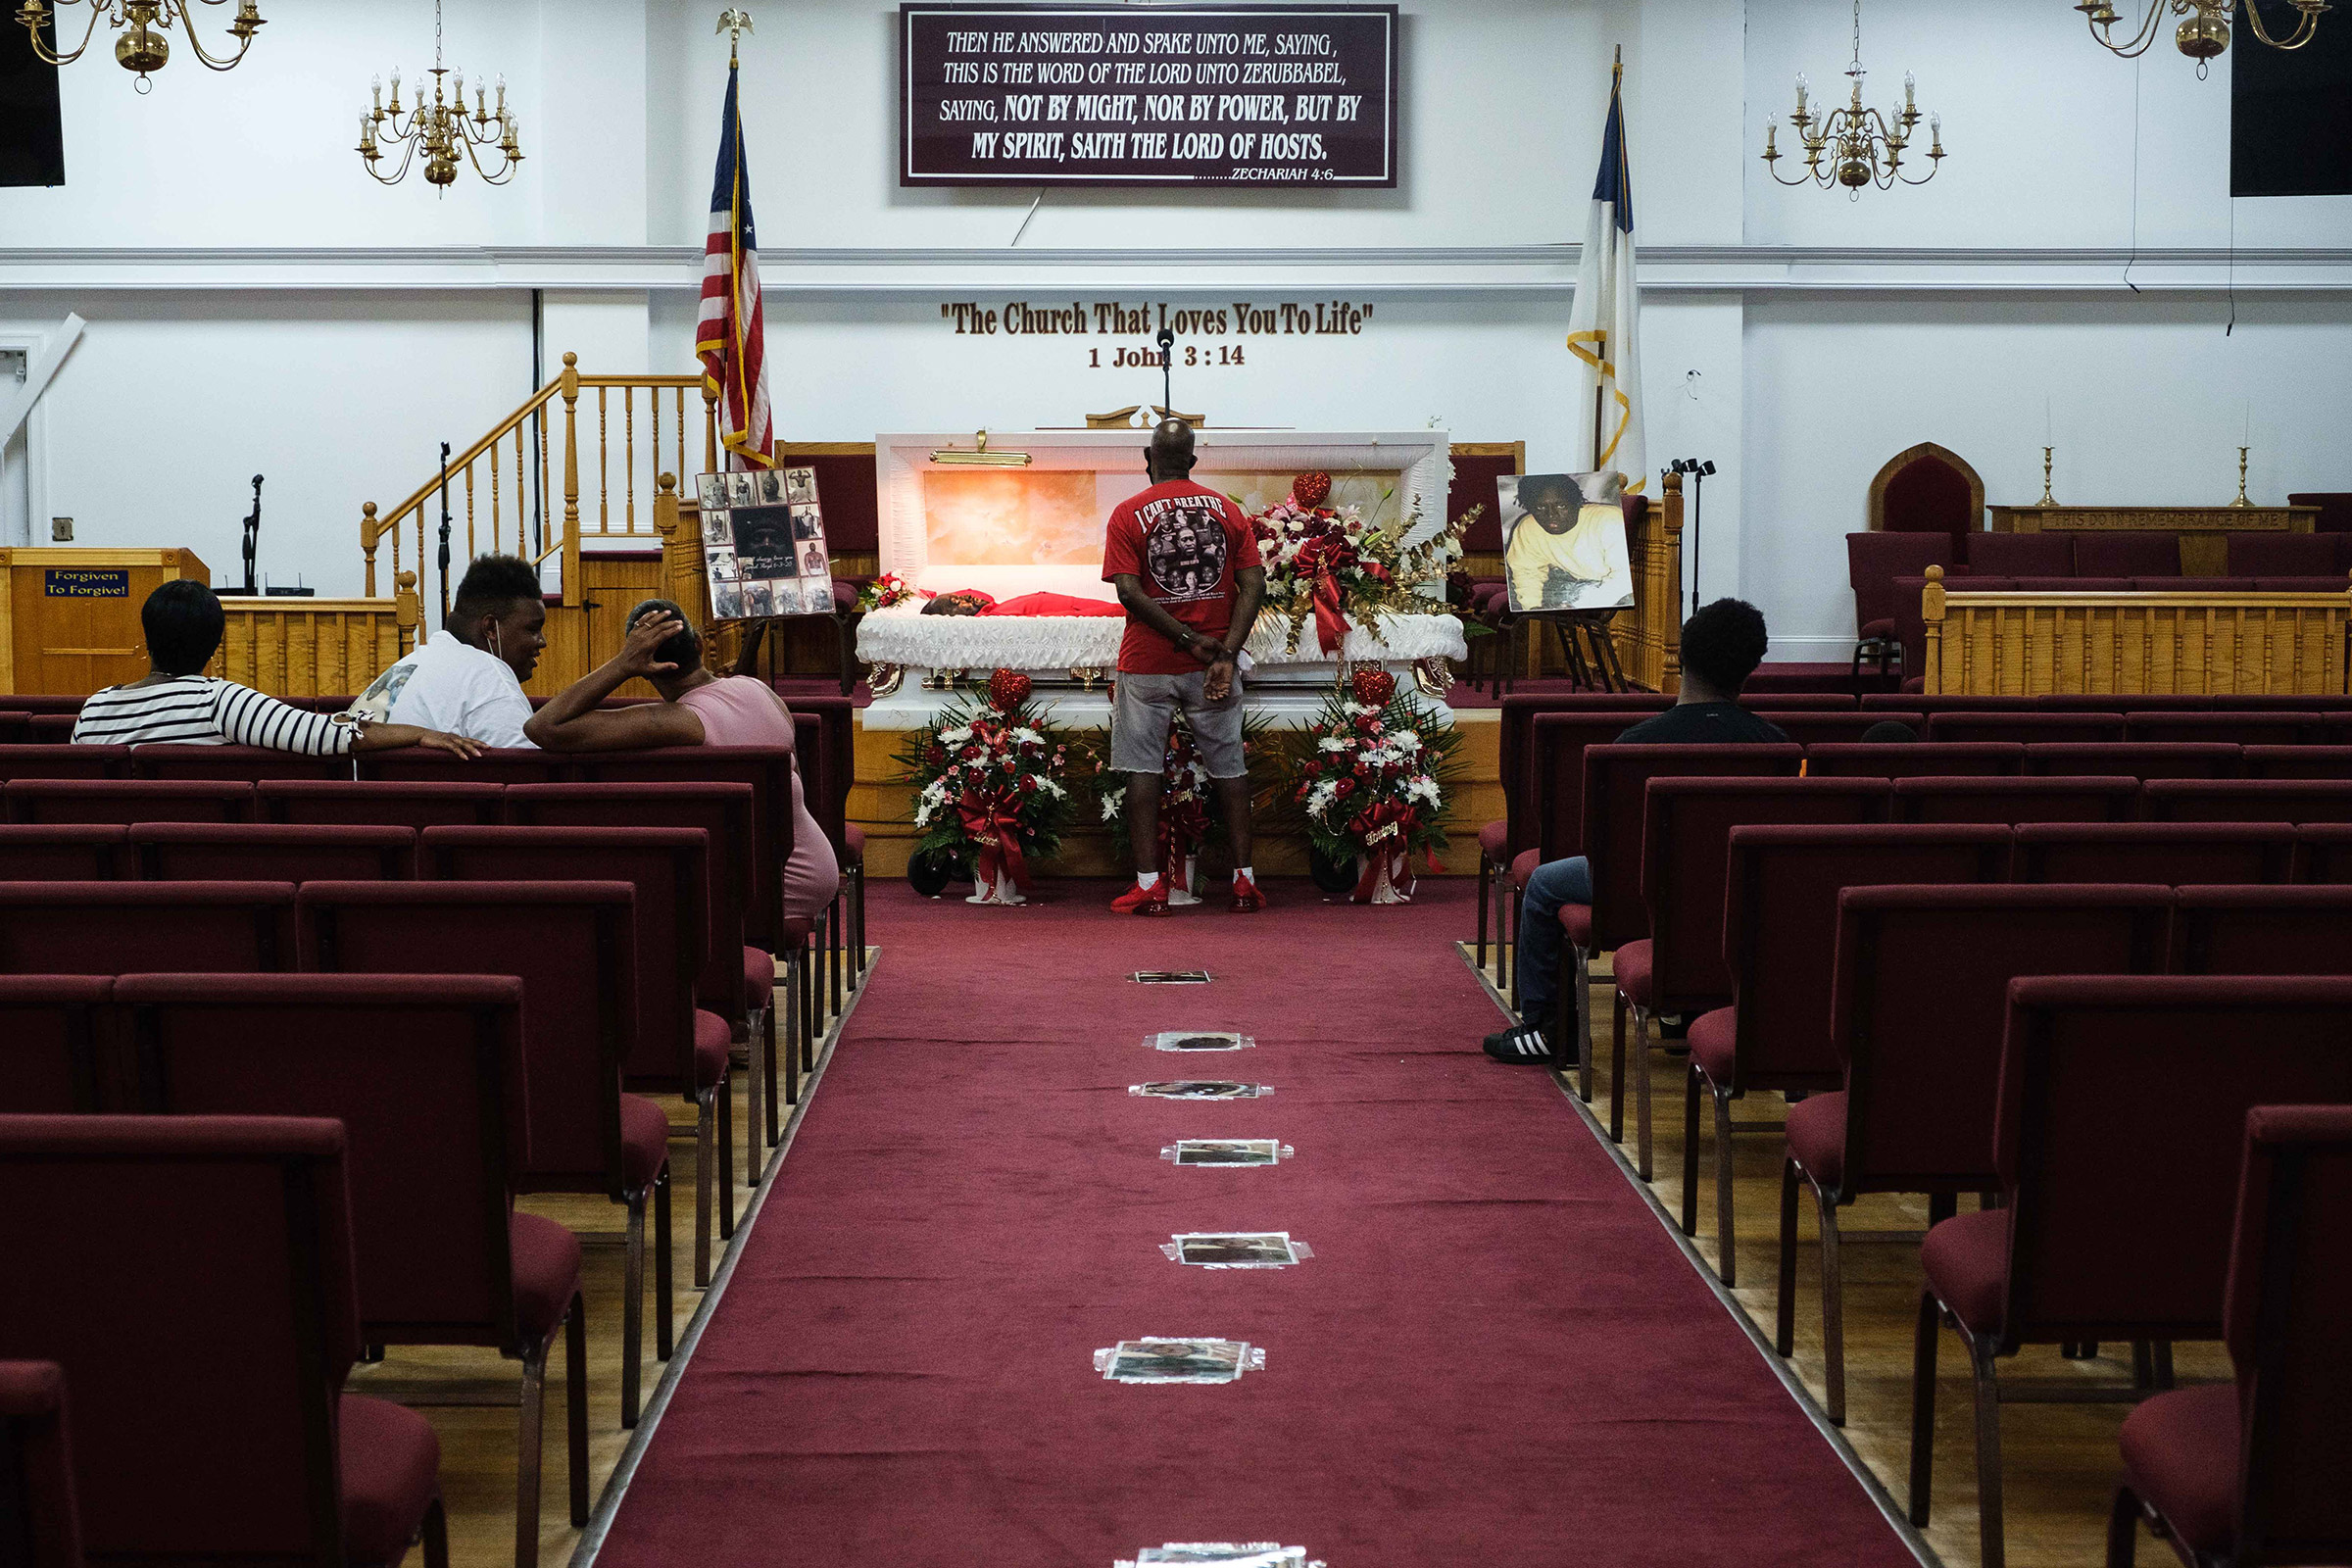 James Floyd, Jamel Floyd’s father, looks over his son's body during the wake at Judea United Baptist Church in Hempstead, N.Y., on June 29. (Yuki Iwamura)